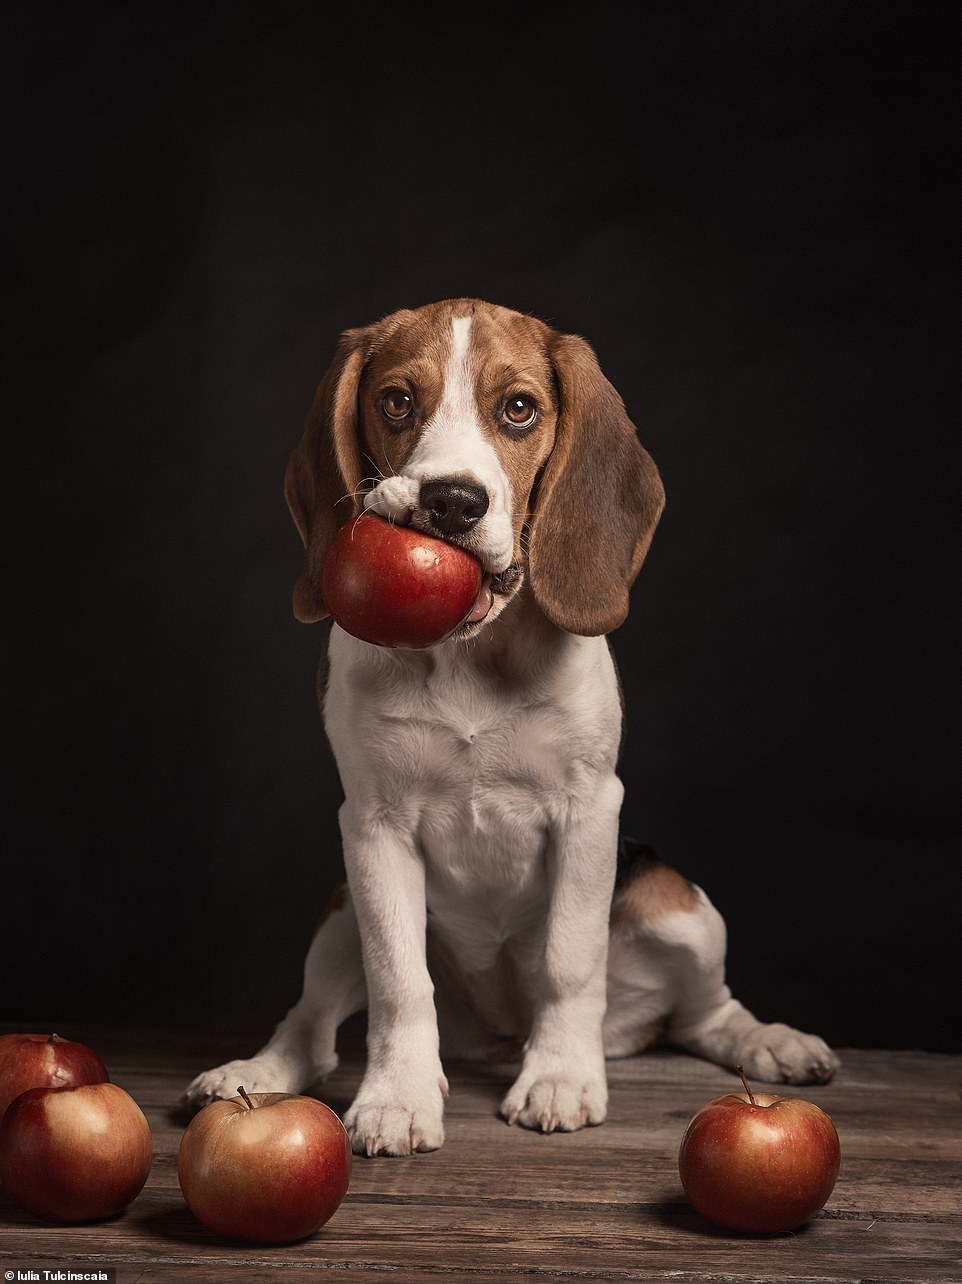 Polish Iulia Tulcinscaia caught her Beagle while chewing an apple